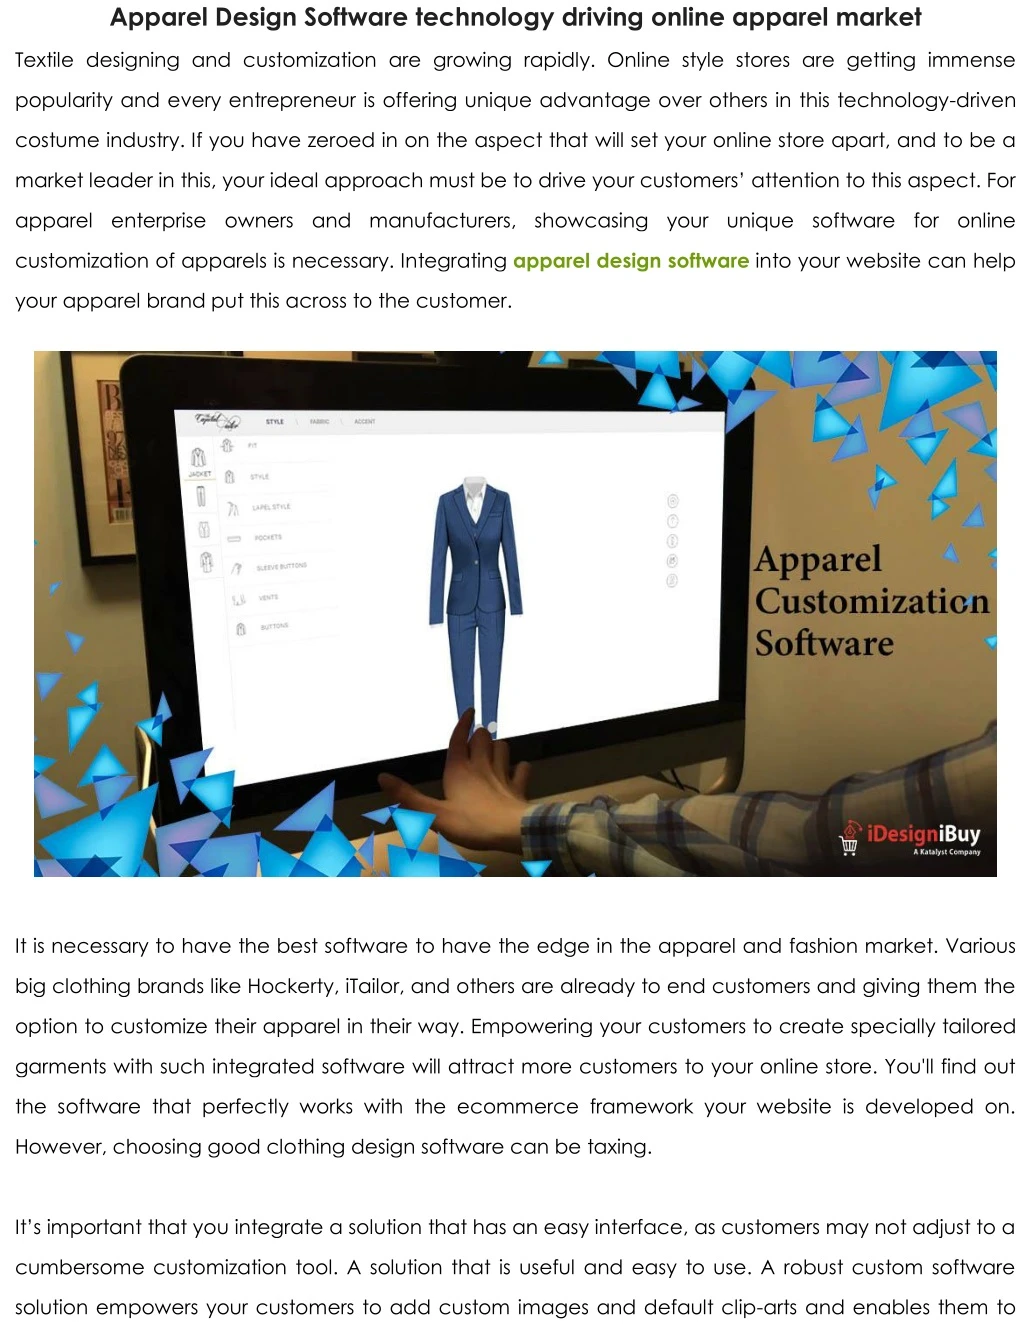 apparel design software technology driving online